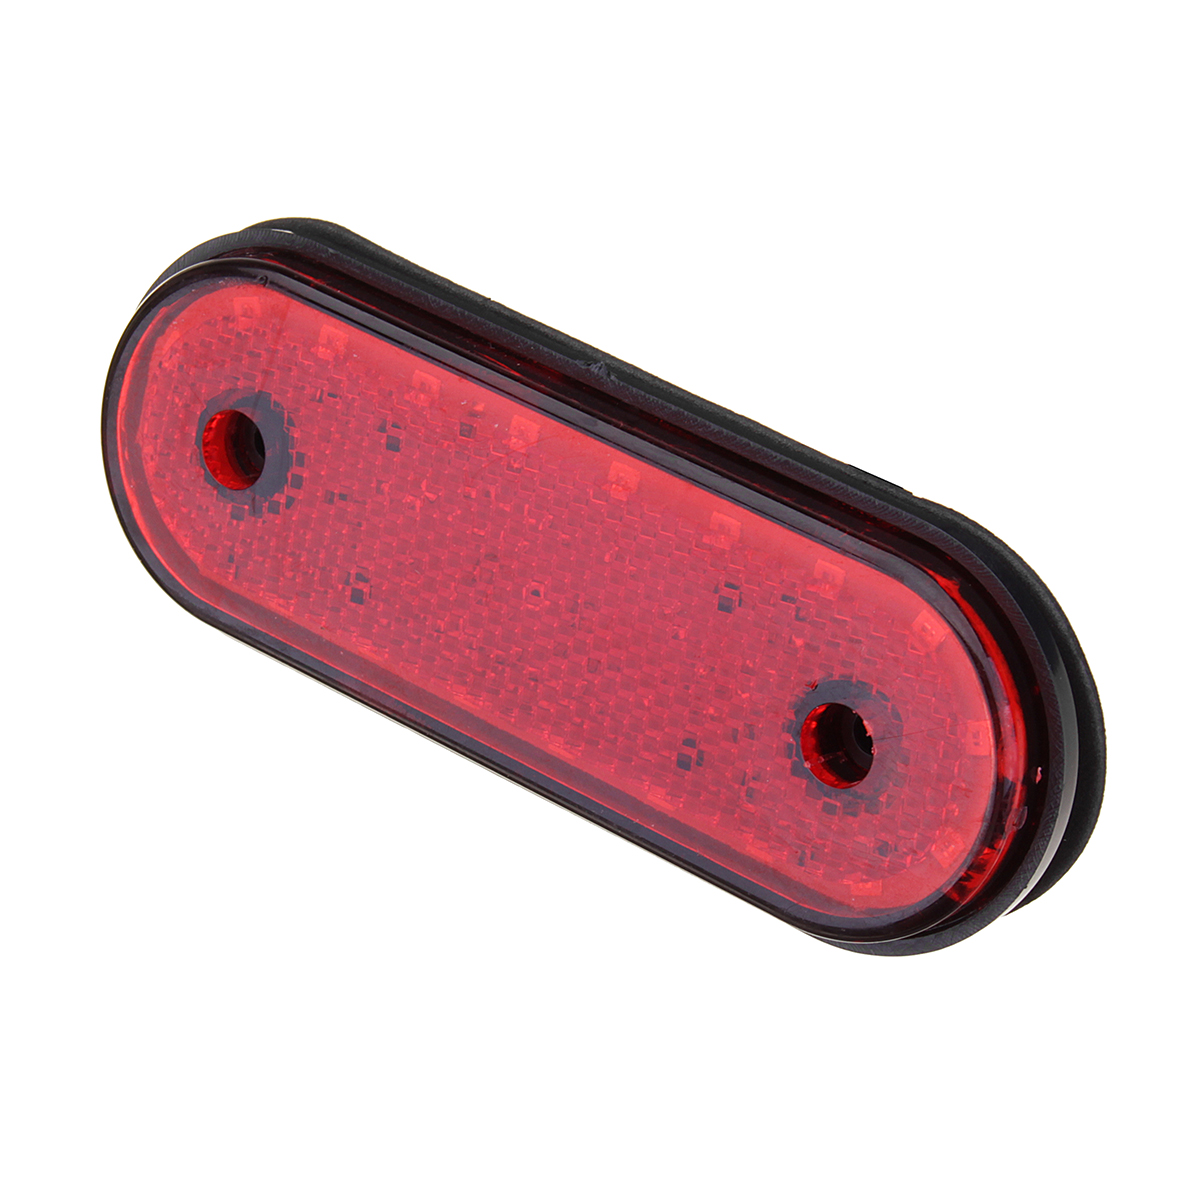 Single-Red-24v-20led-with-rubber-edge-12cm-Shock-absorbing-sponge-pad-Reflective-mask-Ip67-side-Corn-1631413-5